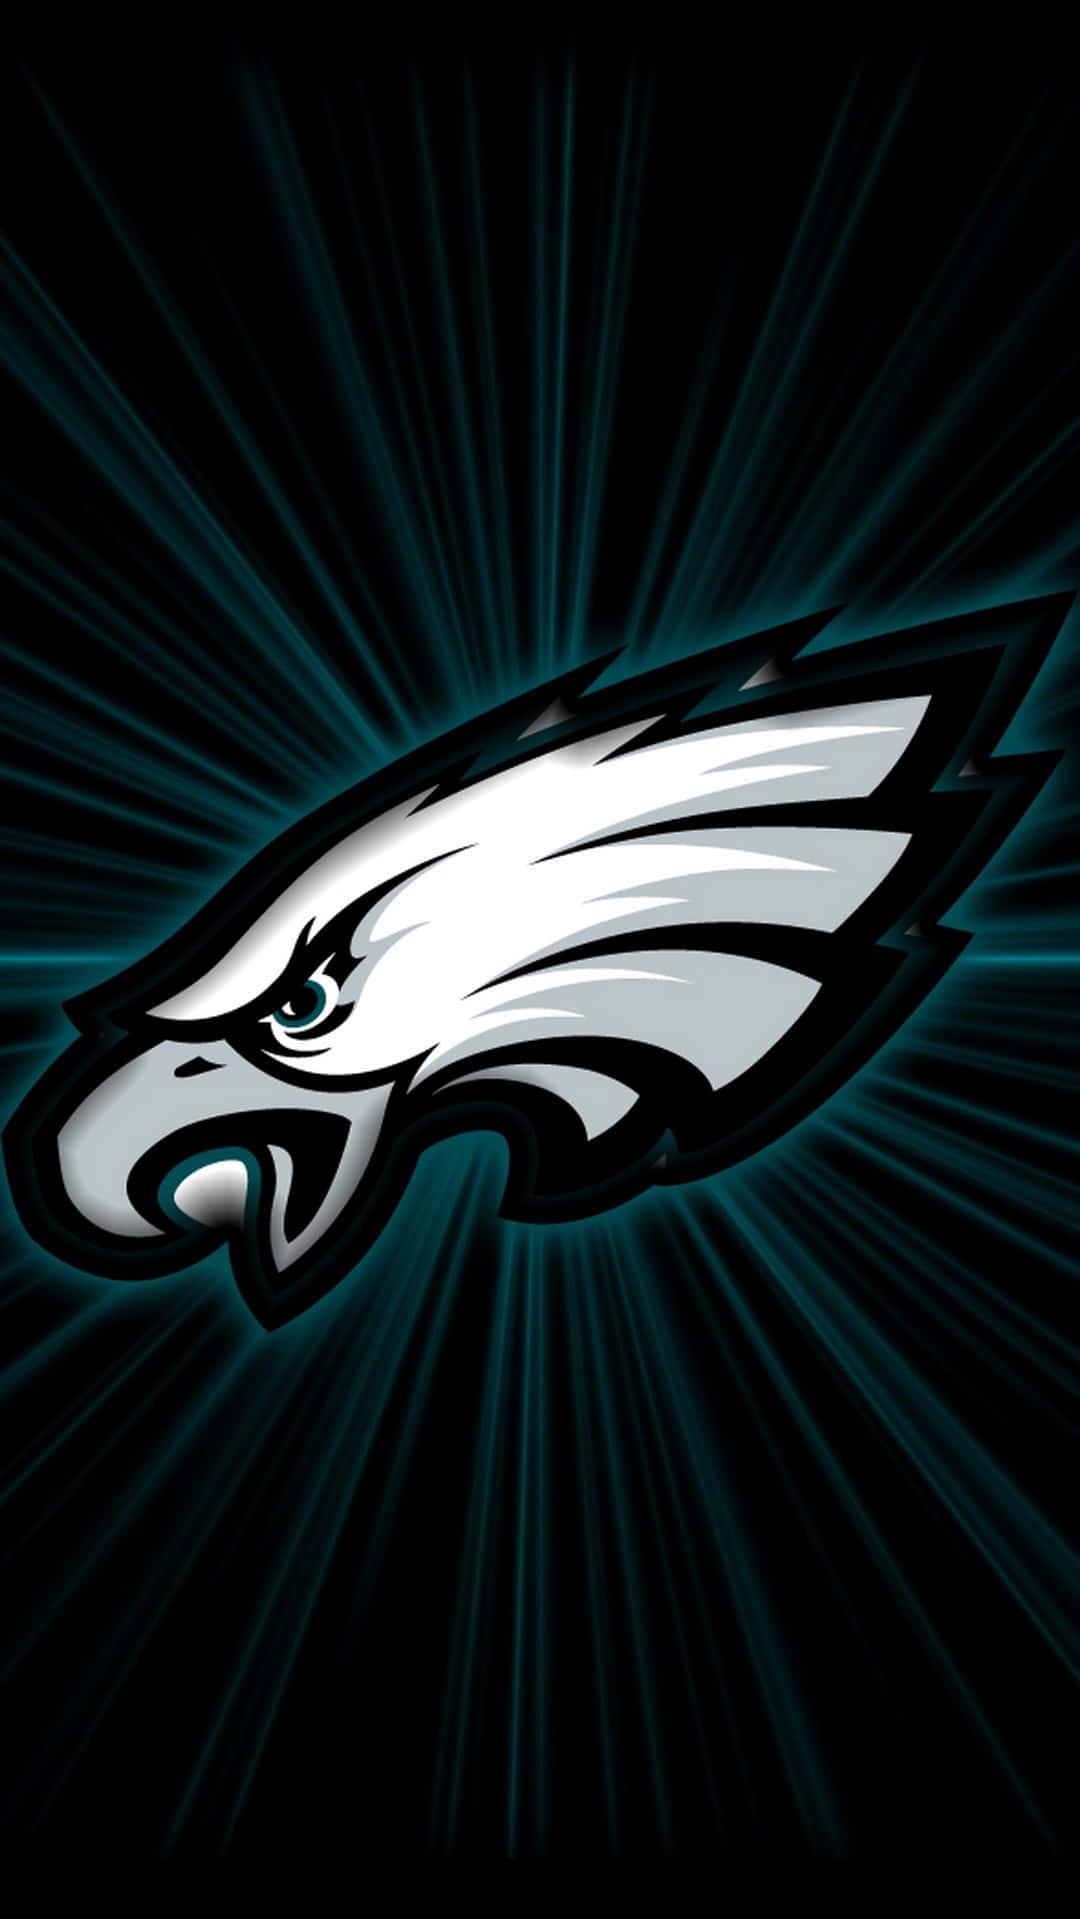 Special Edition Philadelphia Eagles iPhone Wallpaper